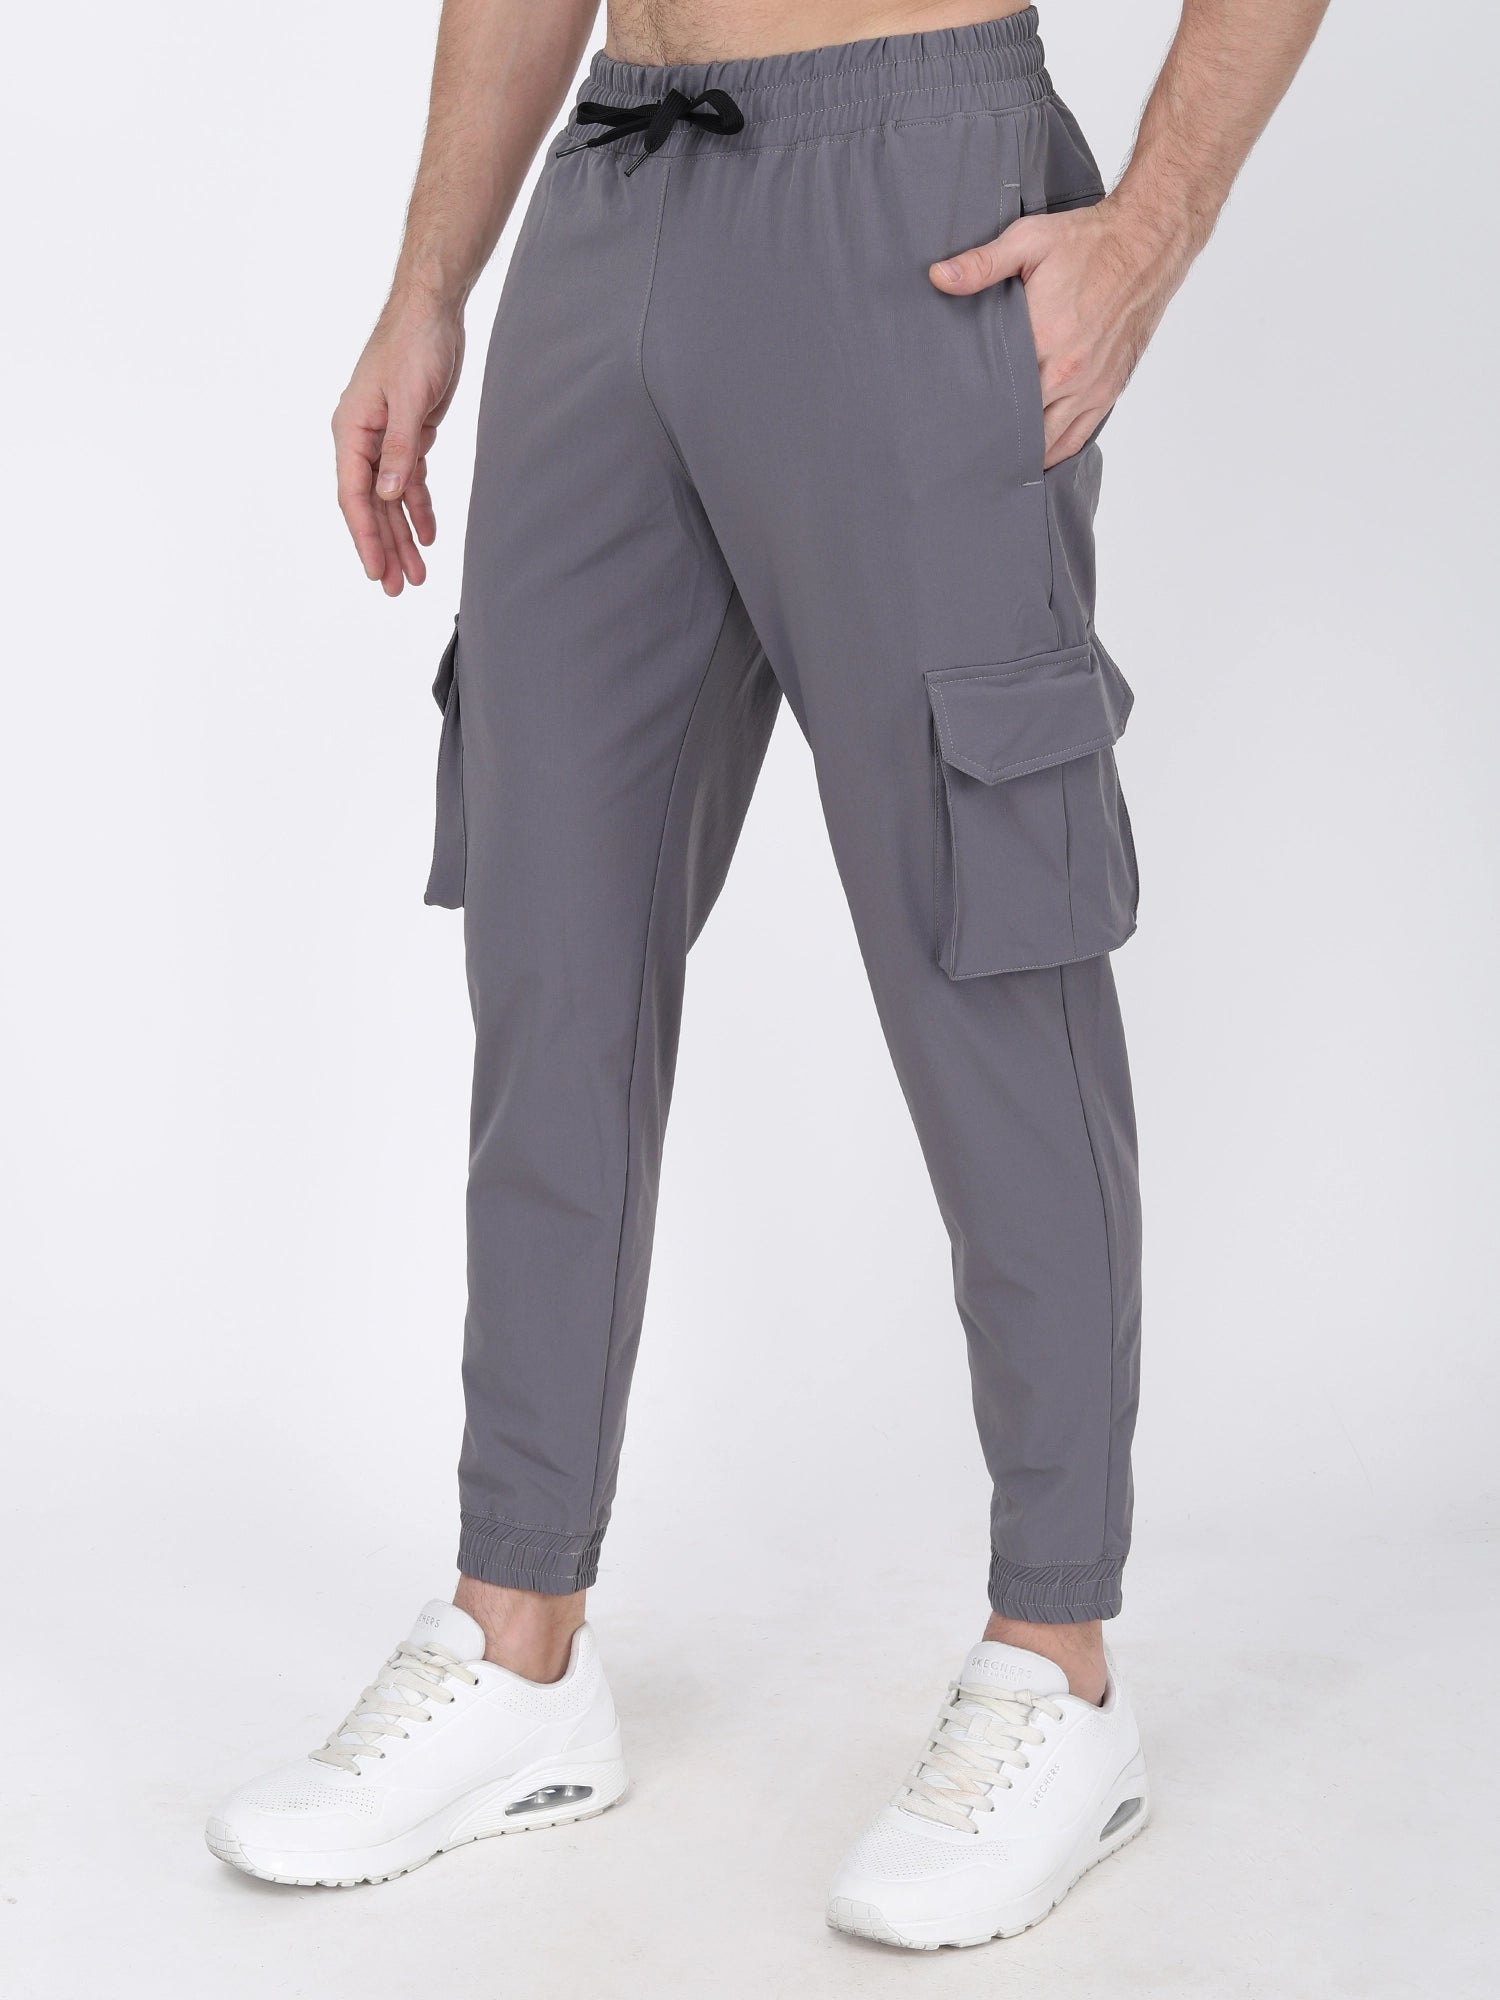 829 (3 COLOURS) grey / white / black long sweatpants pants soft cotton track  pants casual high waisted baggy trouser… | Outfits, Track pants outfit, Grey  tracksuit